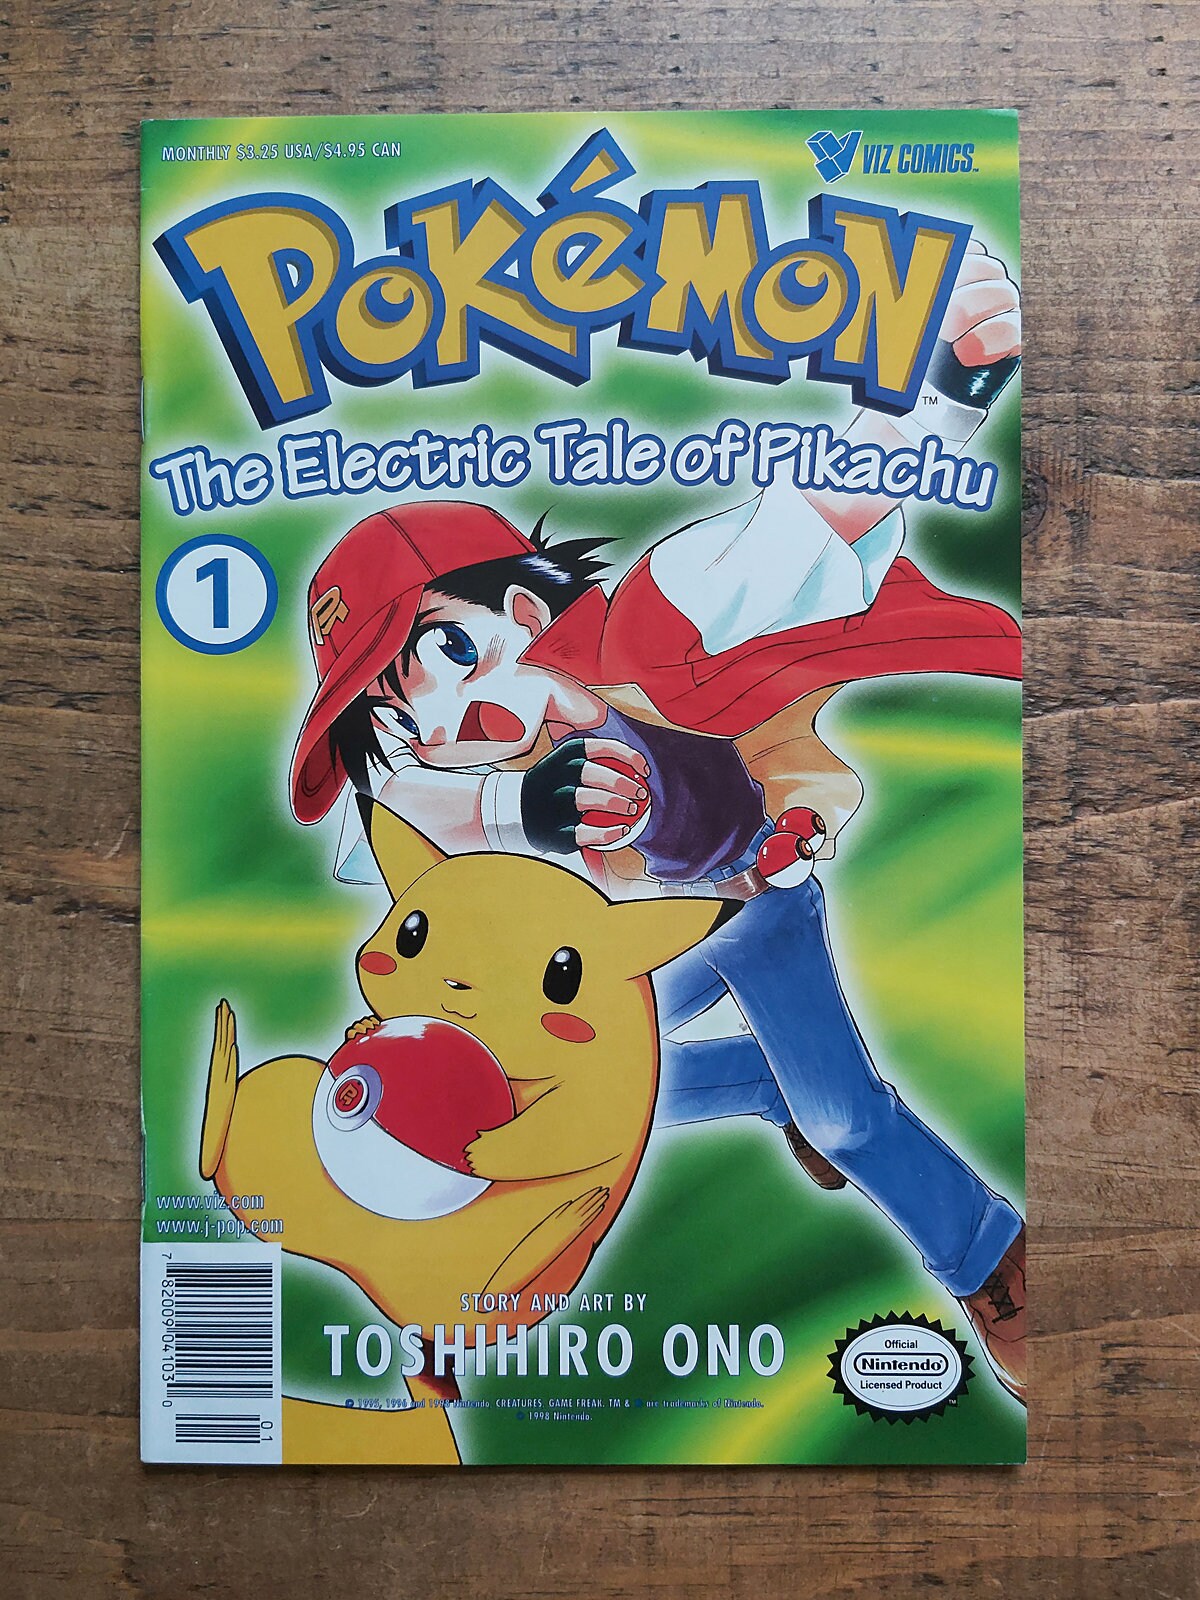 Electric tale of pikachu manga